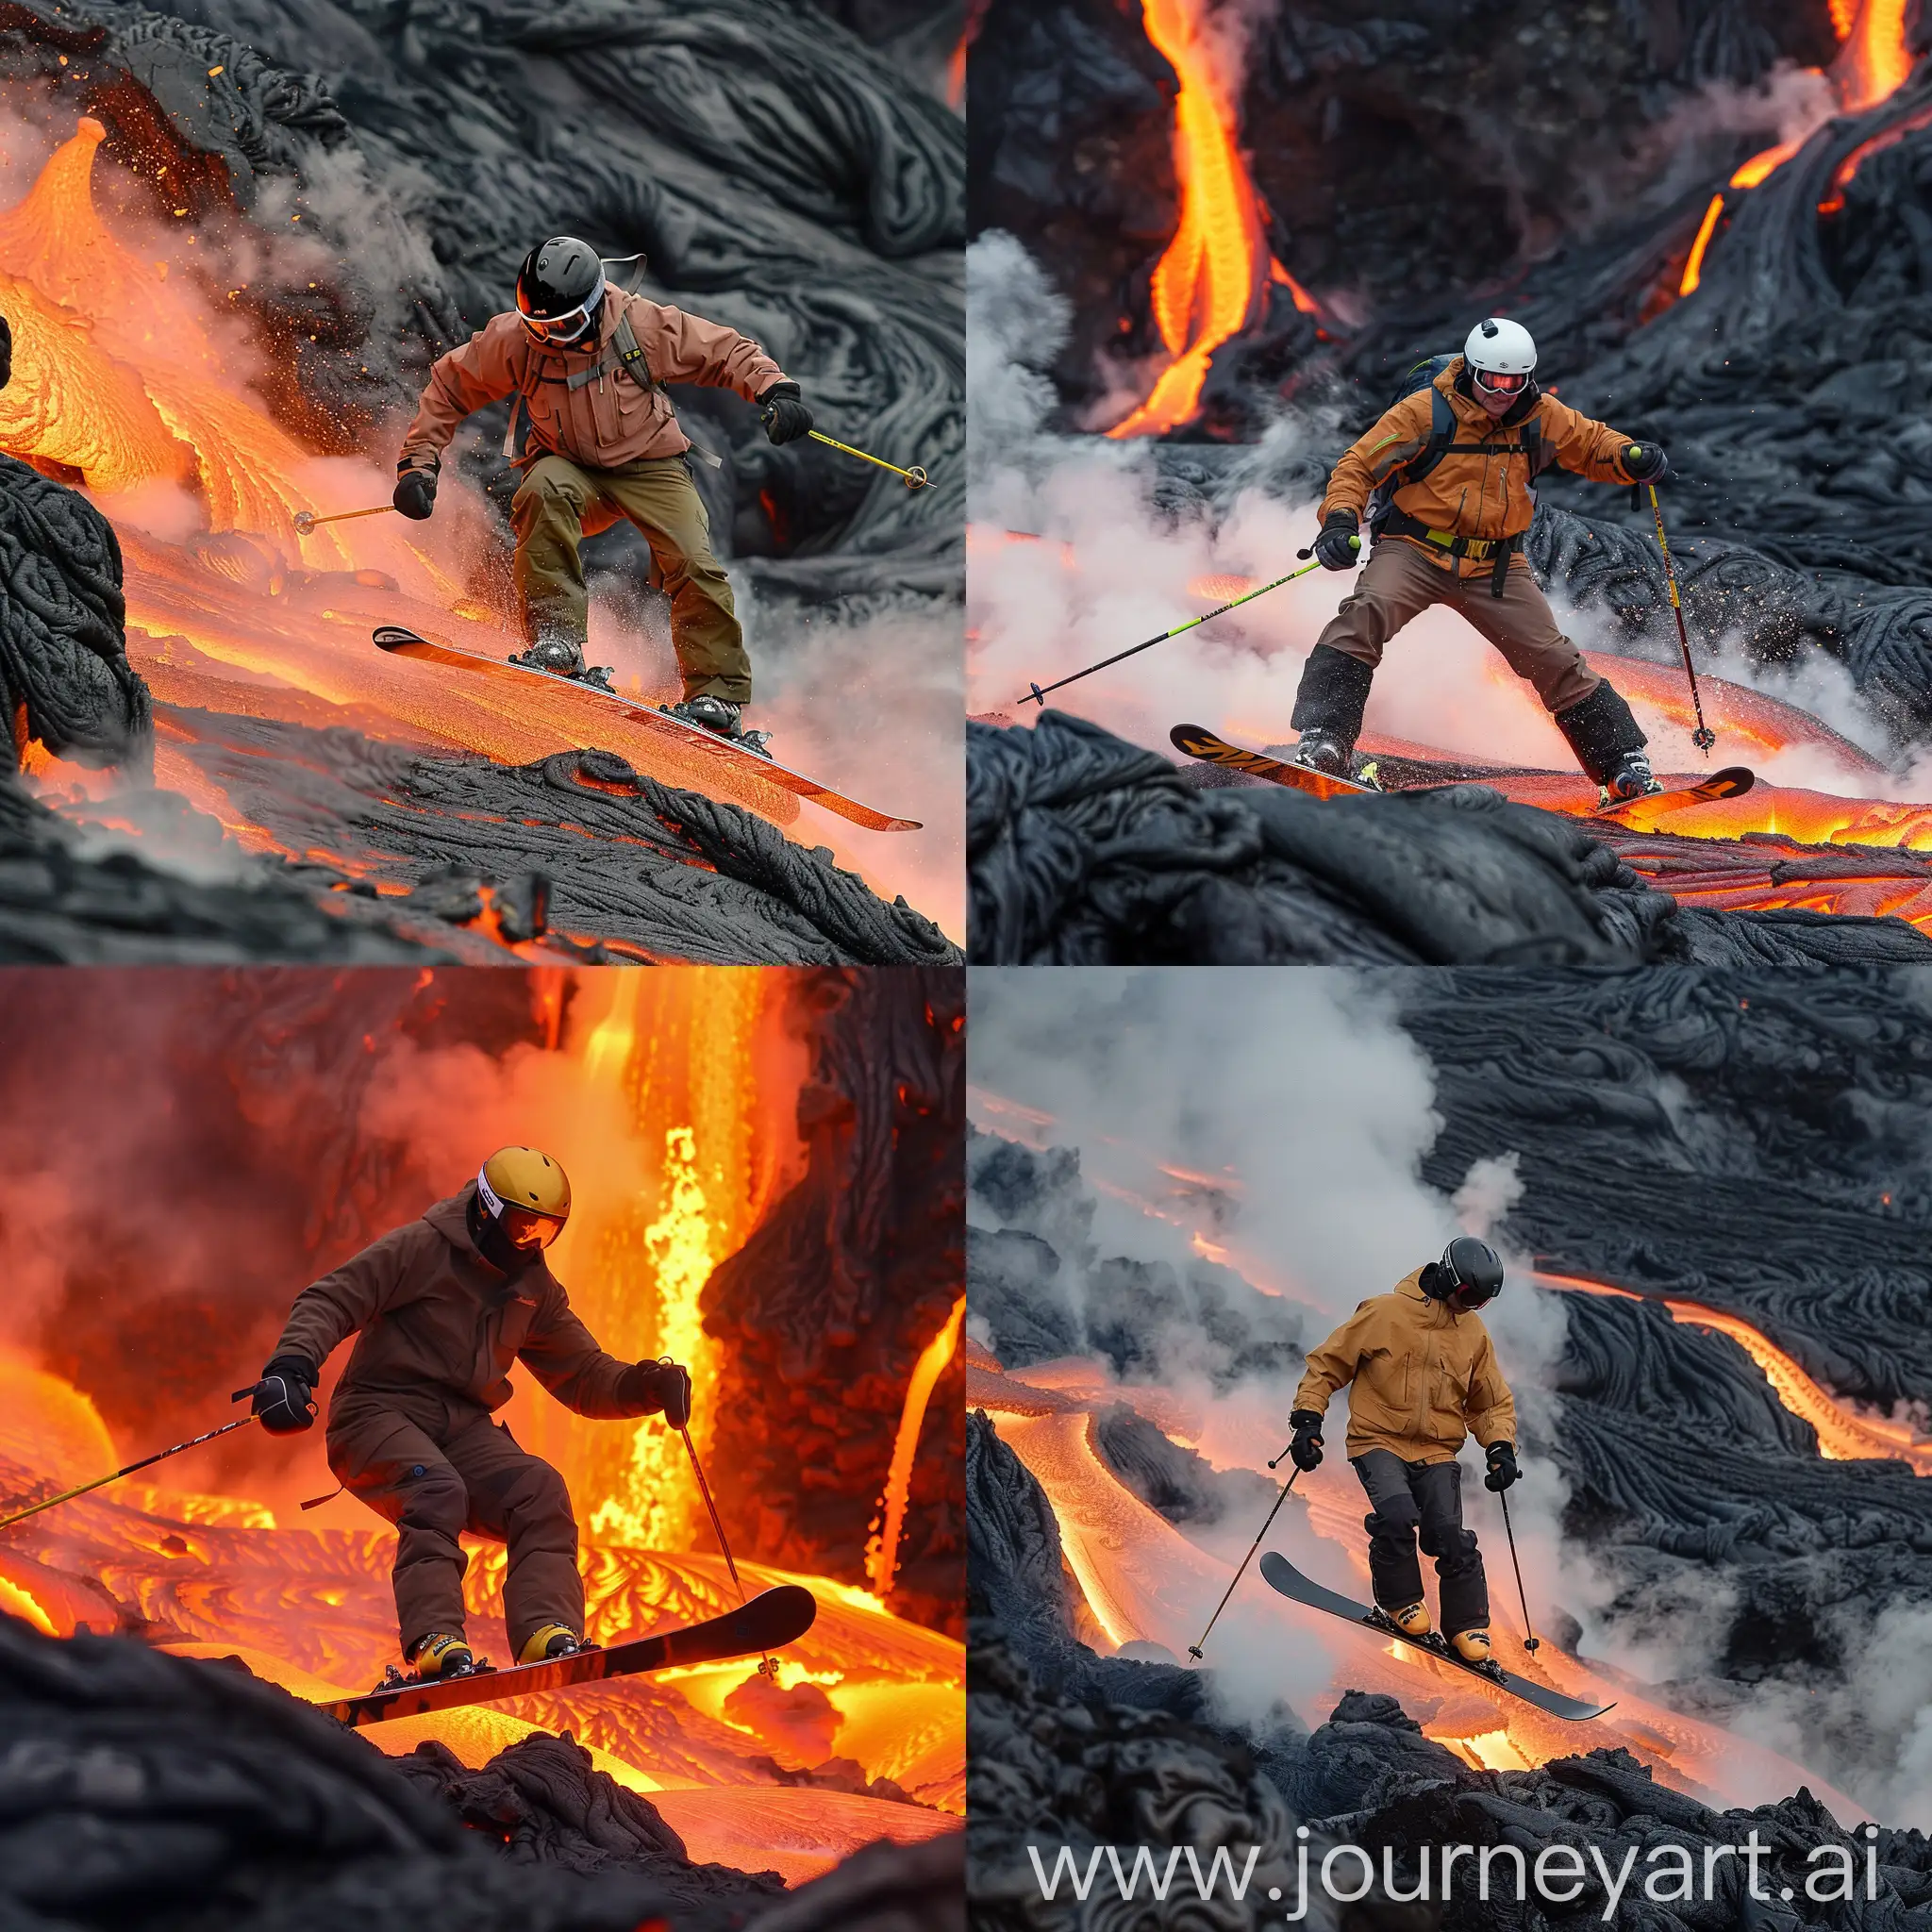 Adventurer-Skating-on-Volcanic-Flow-Extreme-Sports-on-Lava-Fields